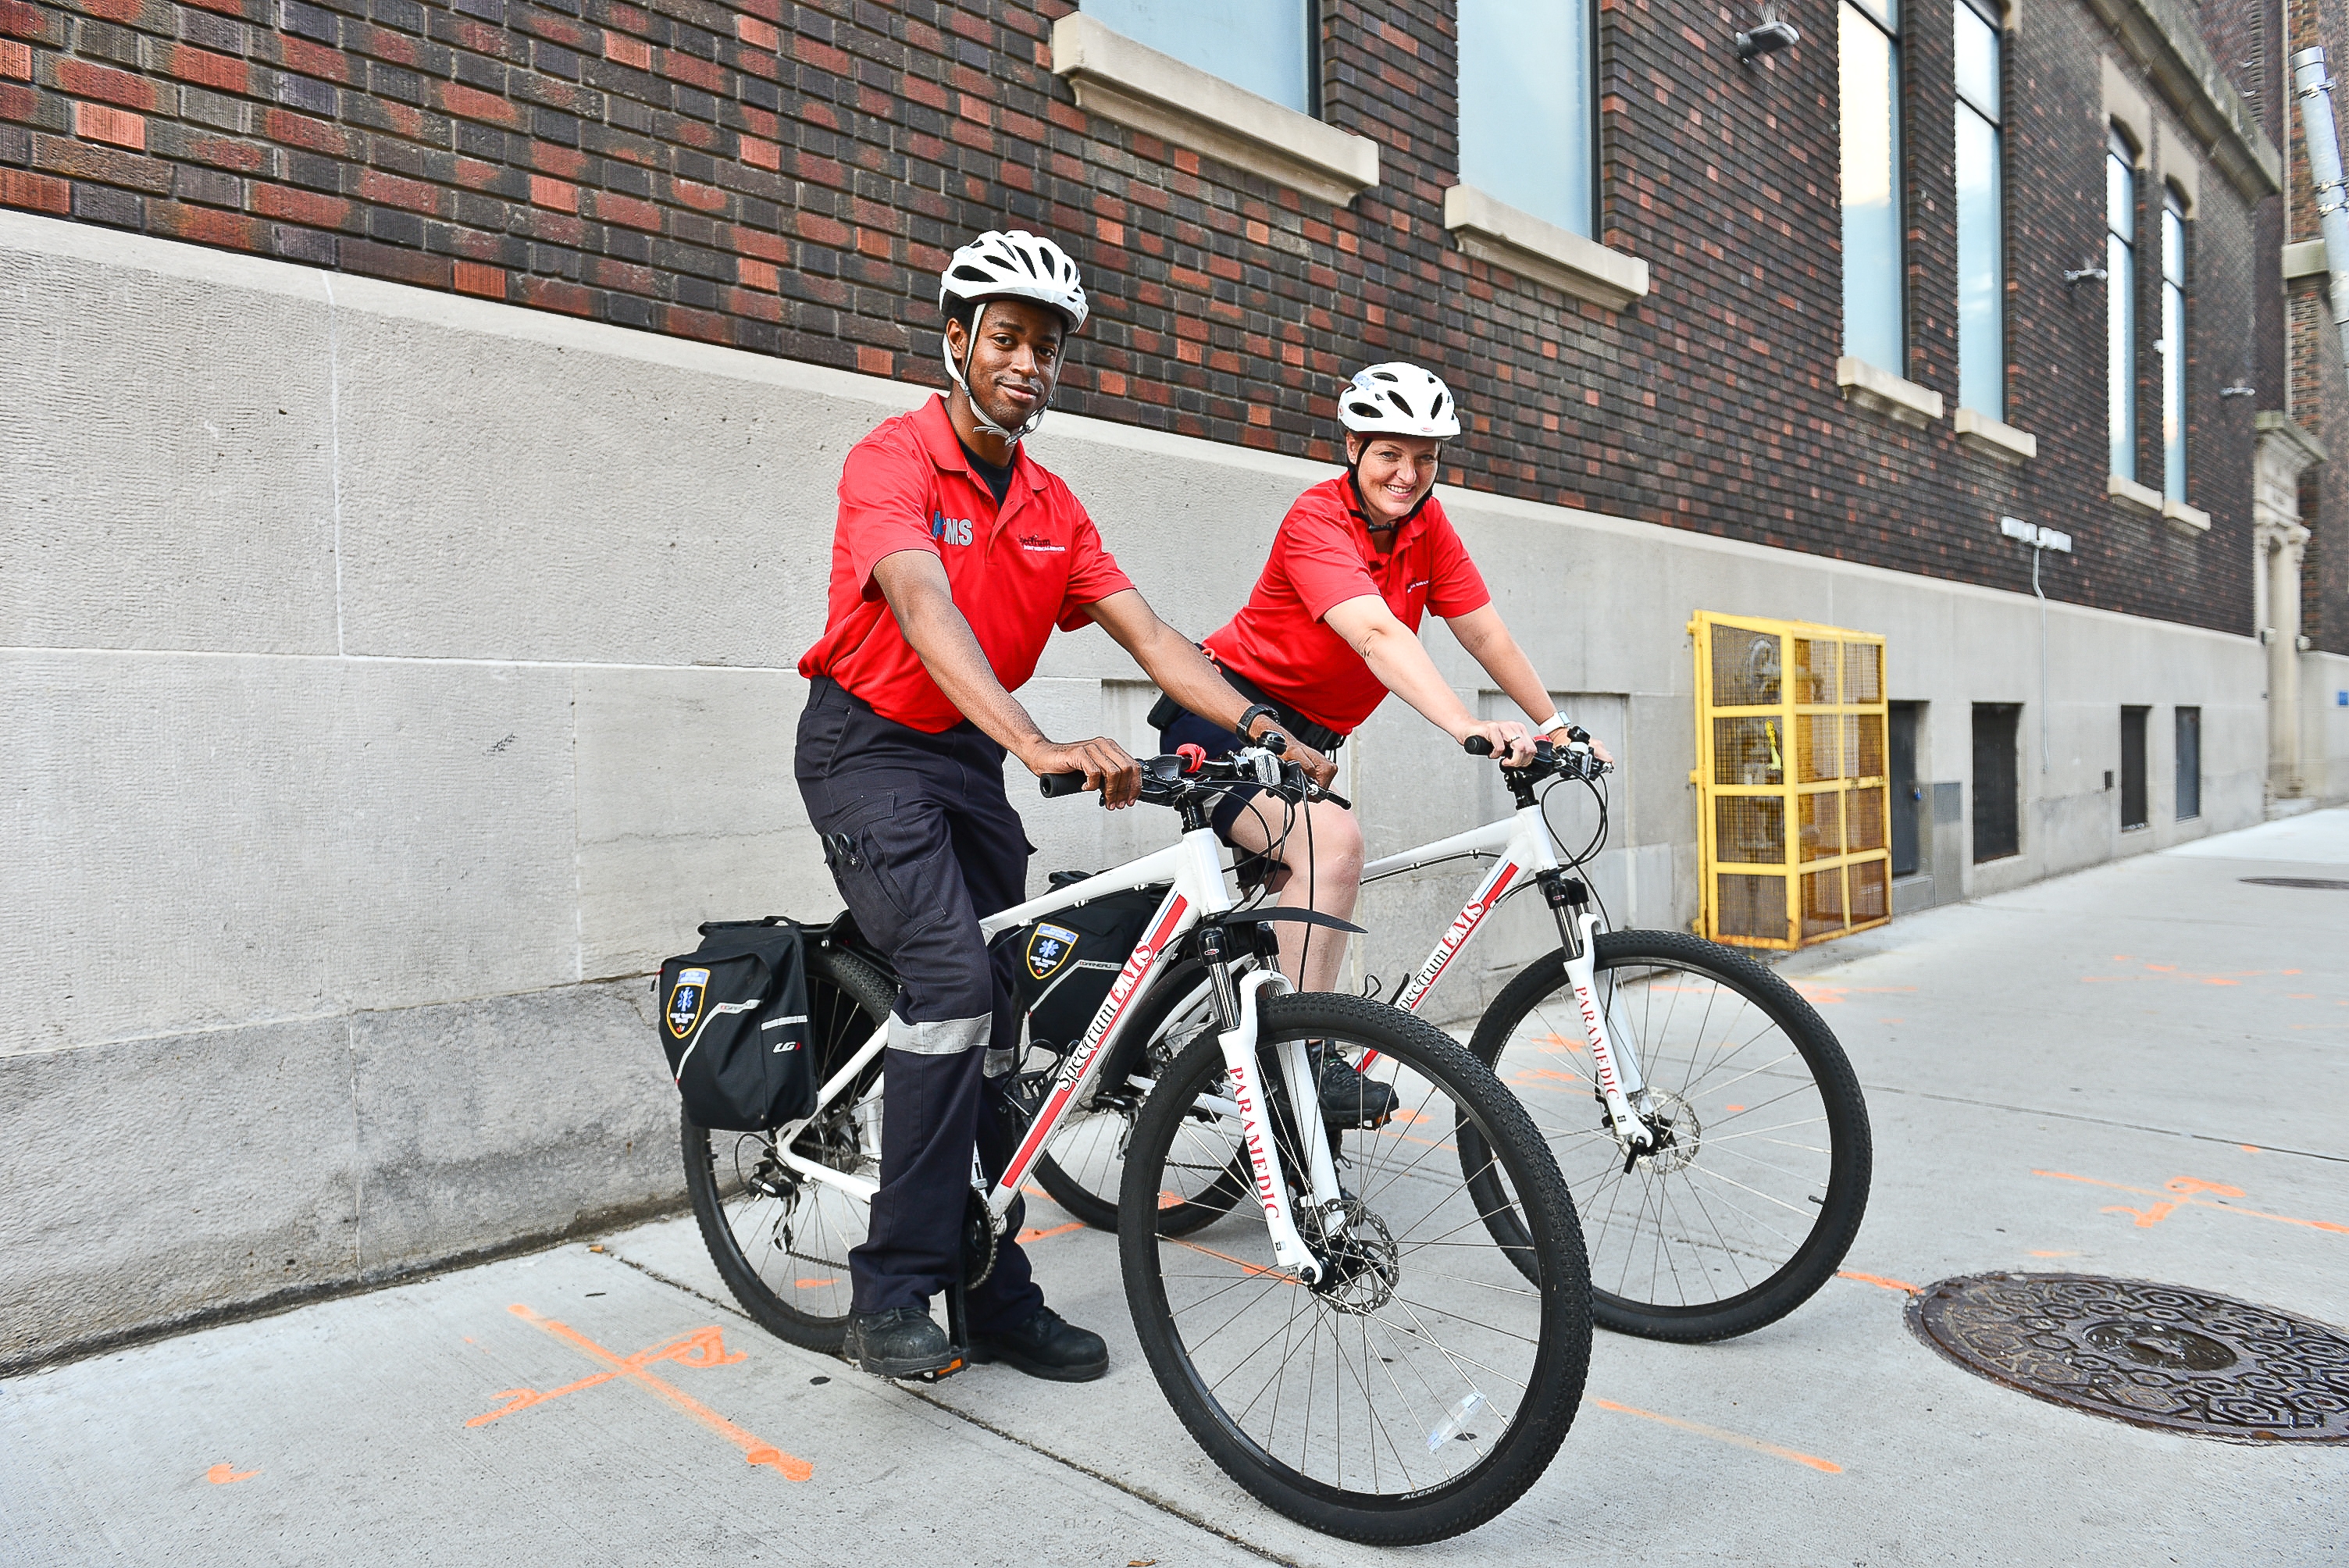 Image: Bicycling street smarts 101